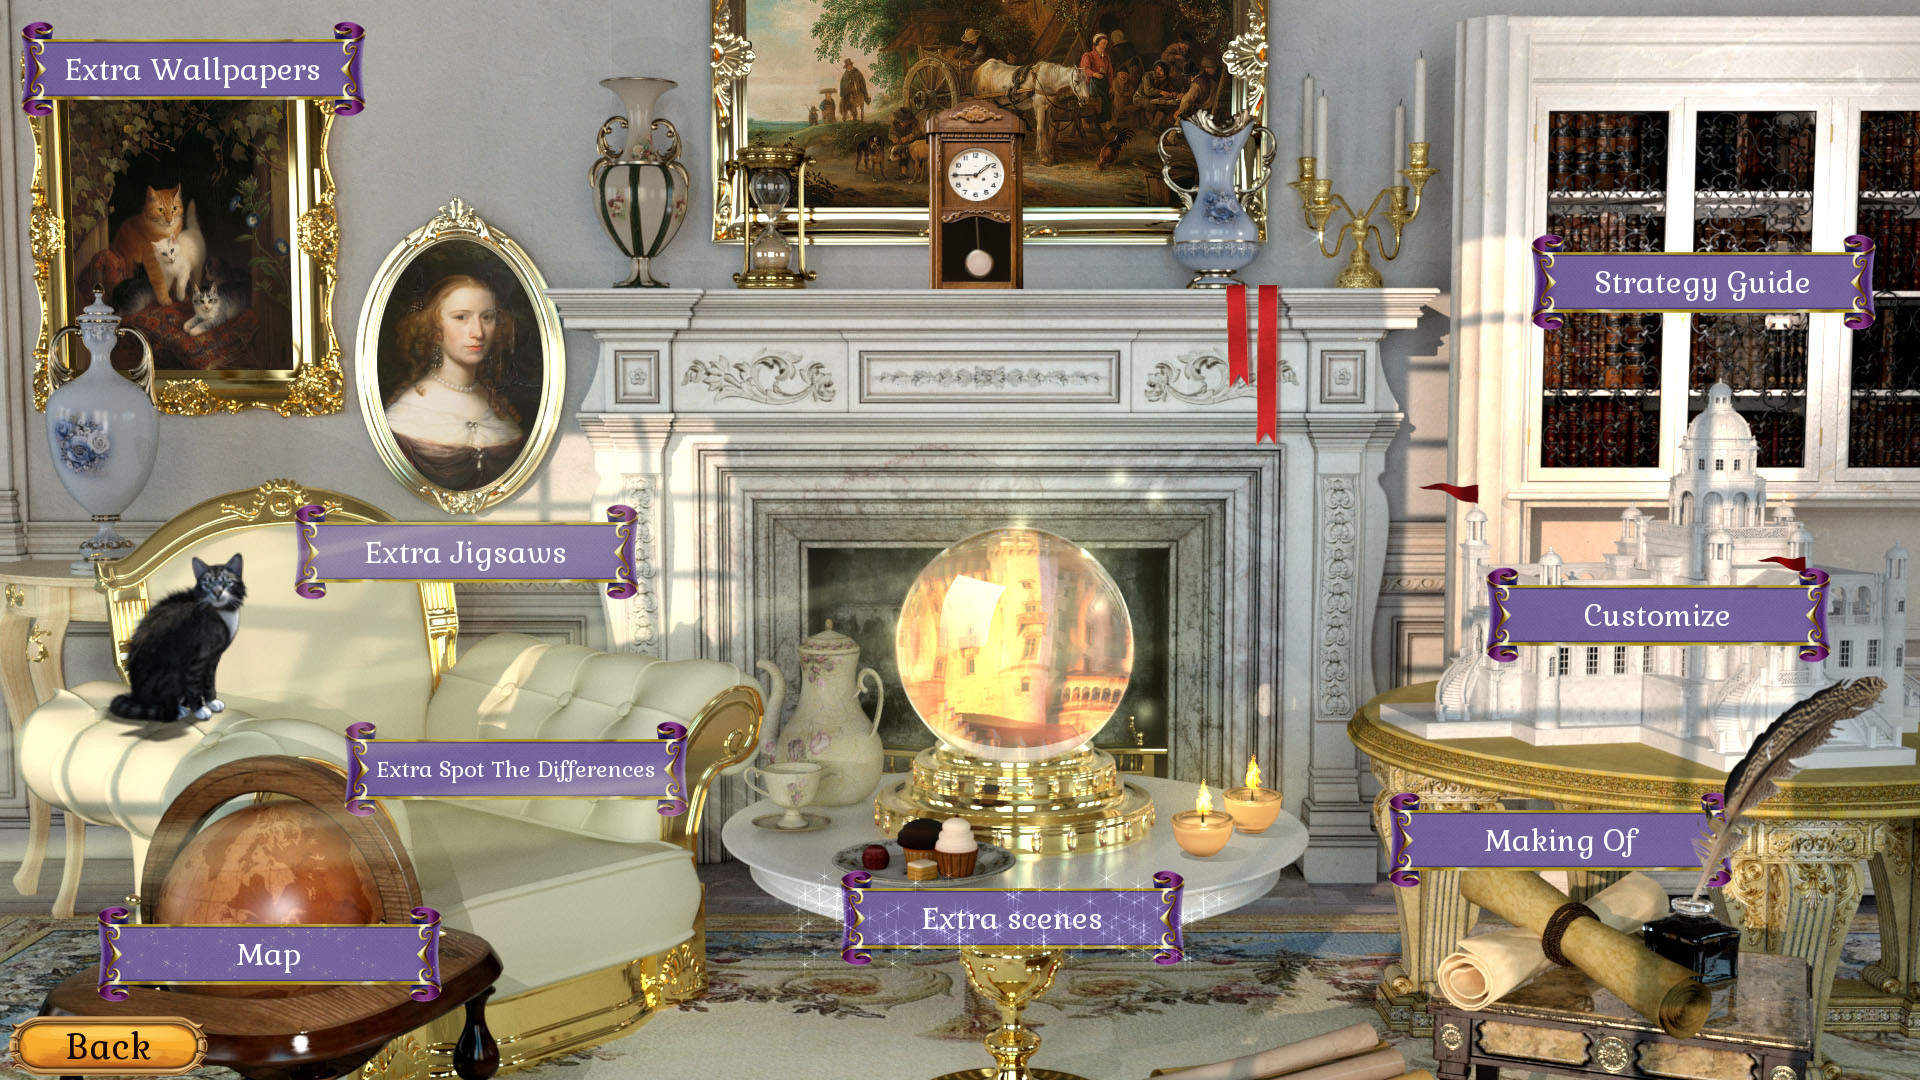 Jewel Match Origins 2 Bavarian Palace Collector's Edition Steam CD Key